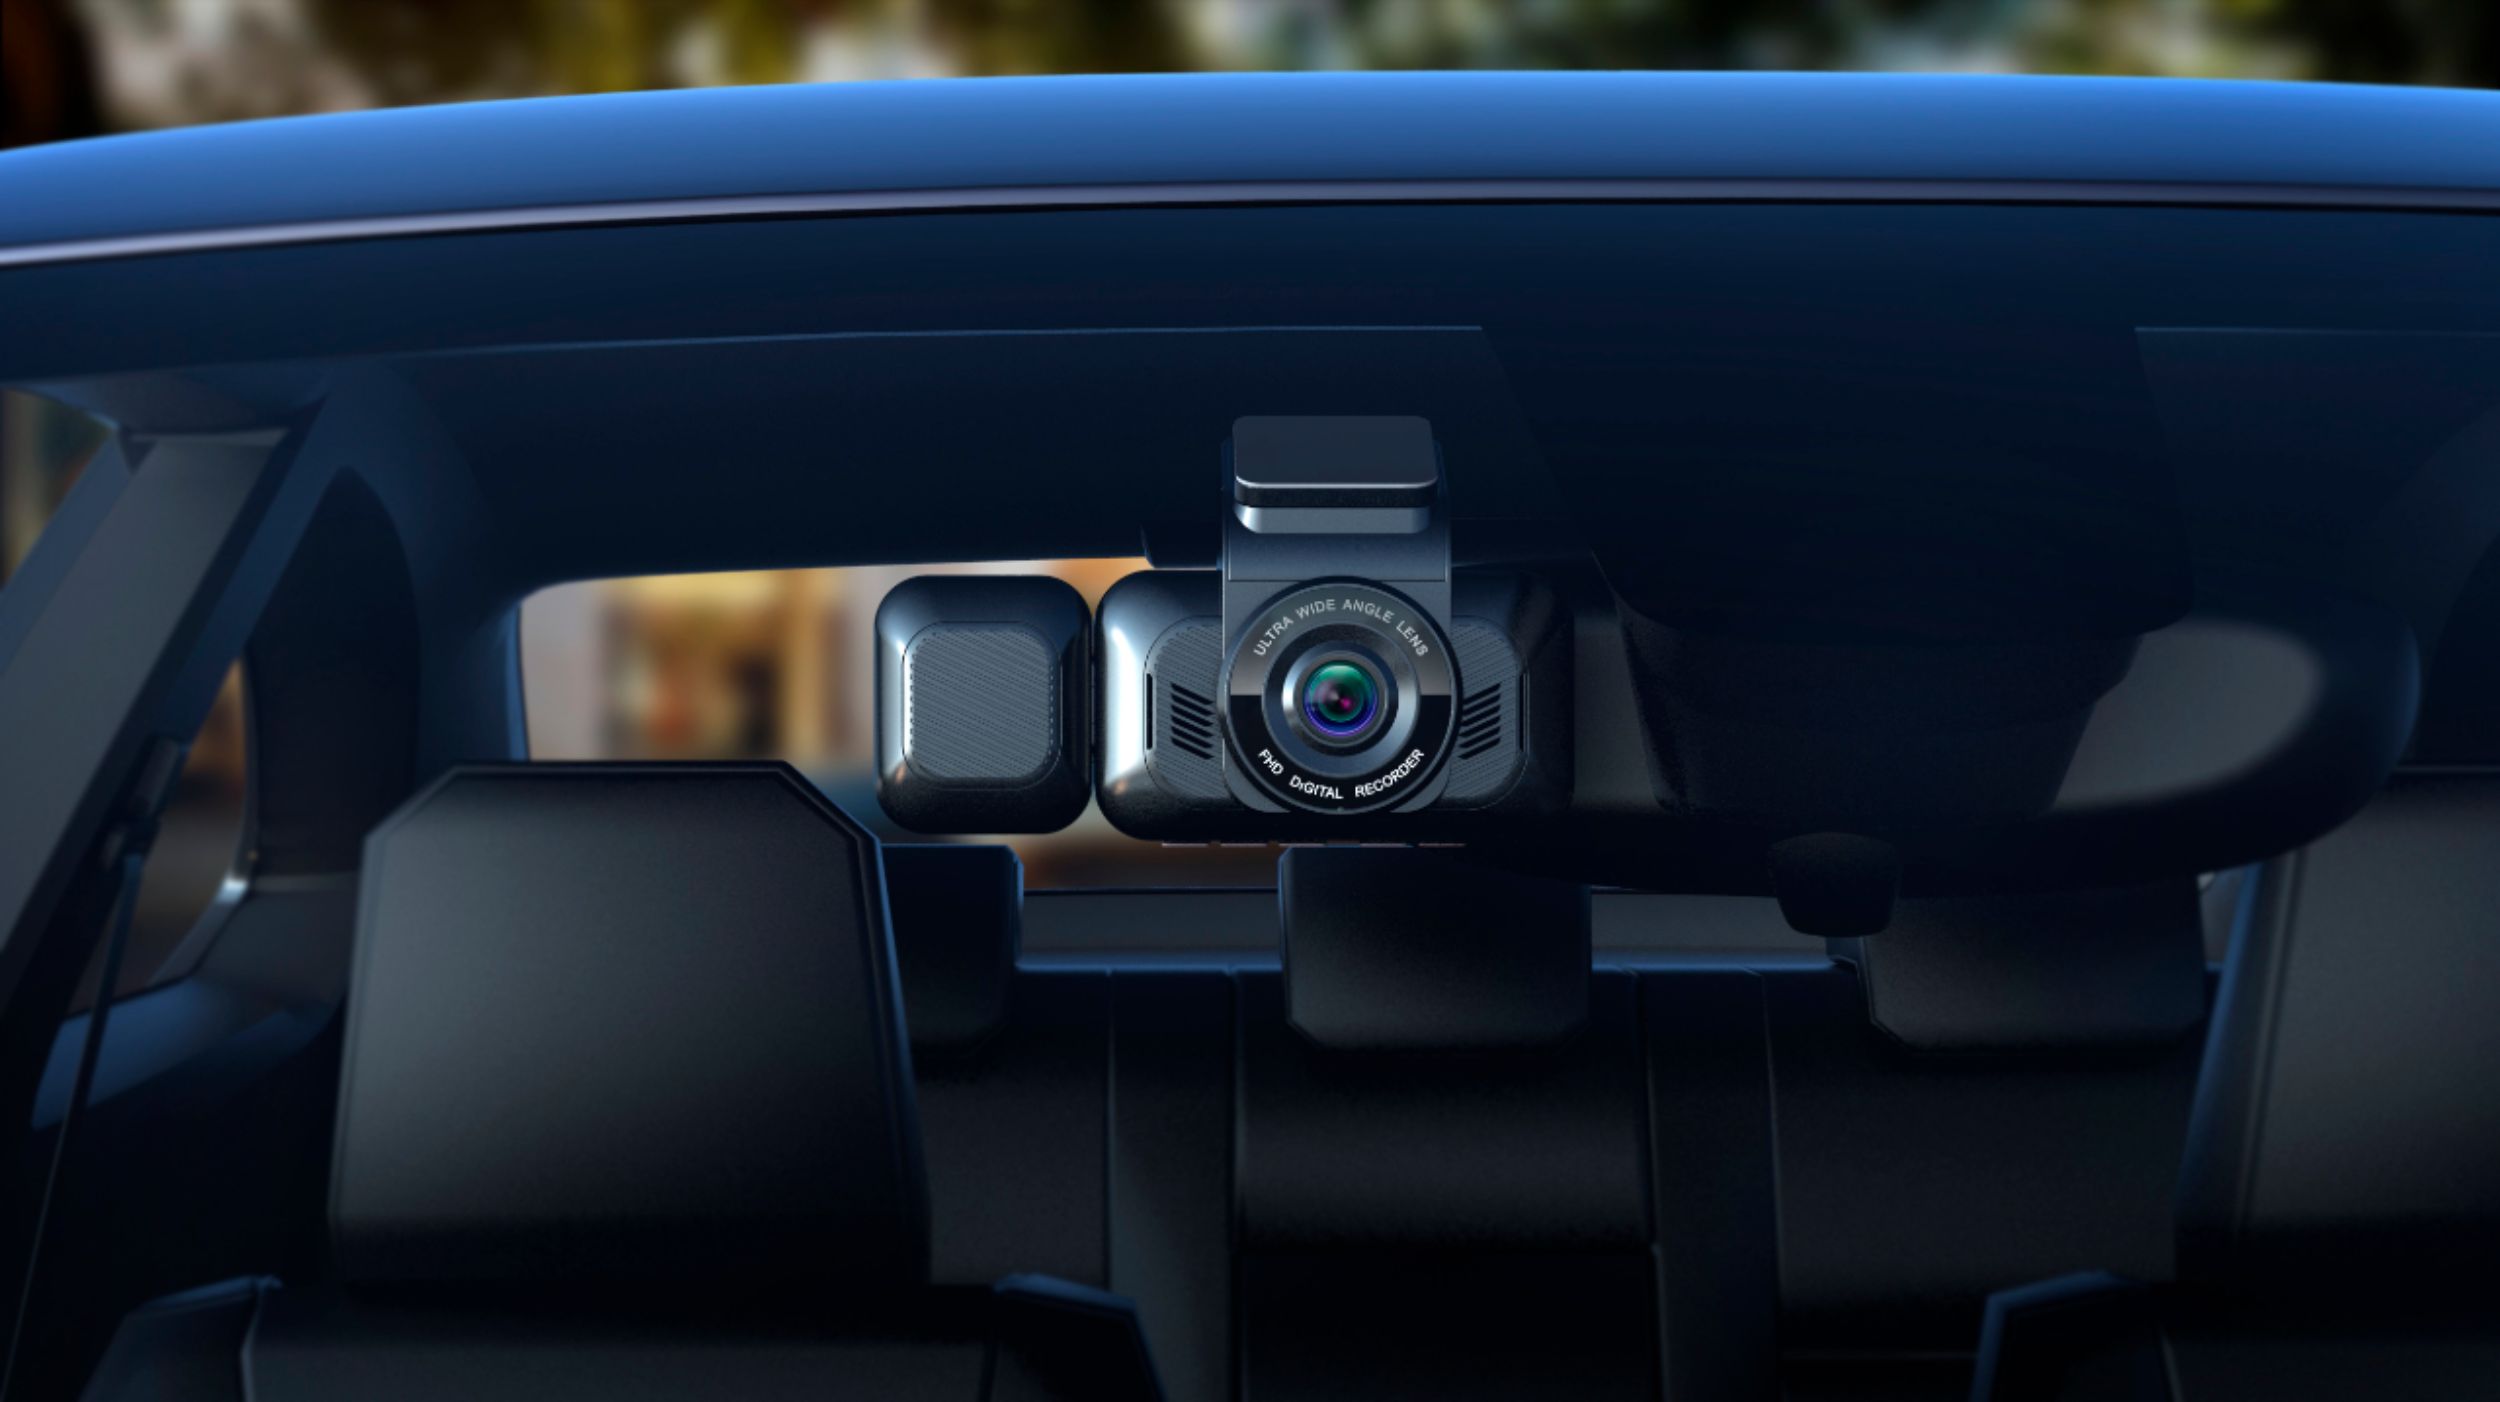 Rexing V55 Dash Cam – 4K Modular Capabilities, 5.0 GHz Wi-Fi, and GPS Car  Dash Camera Recorder